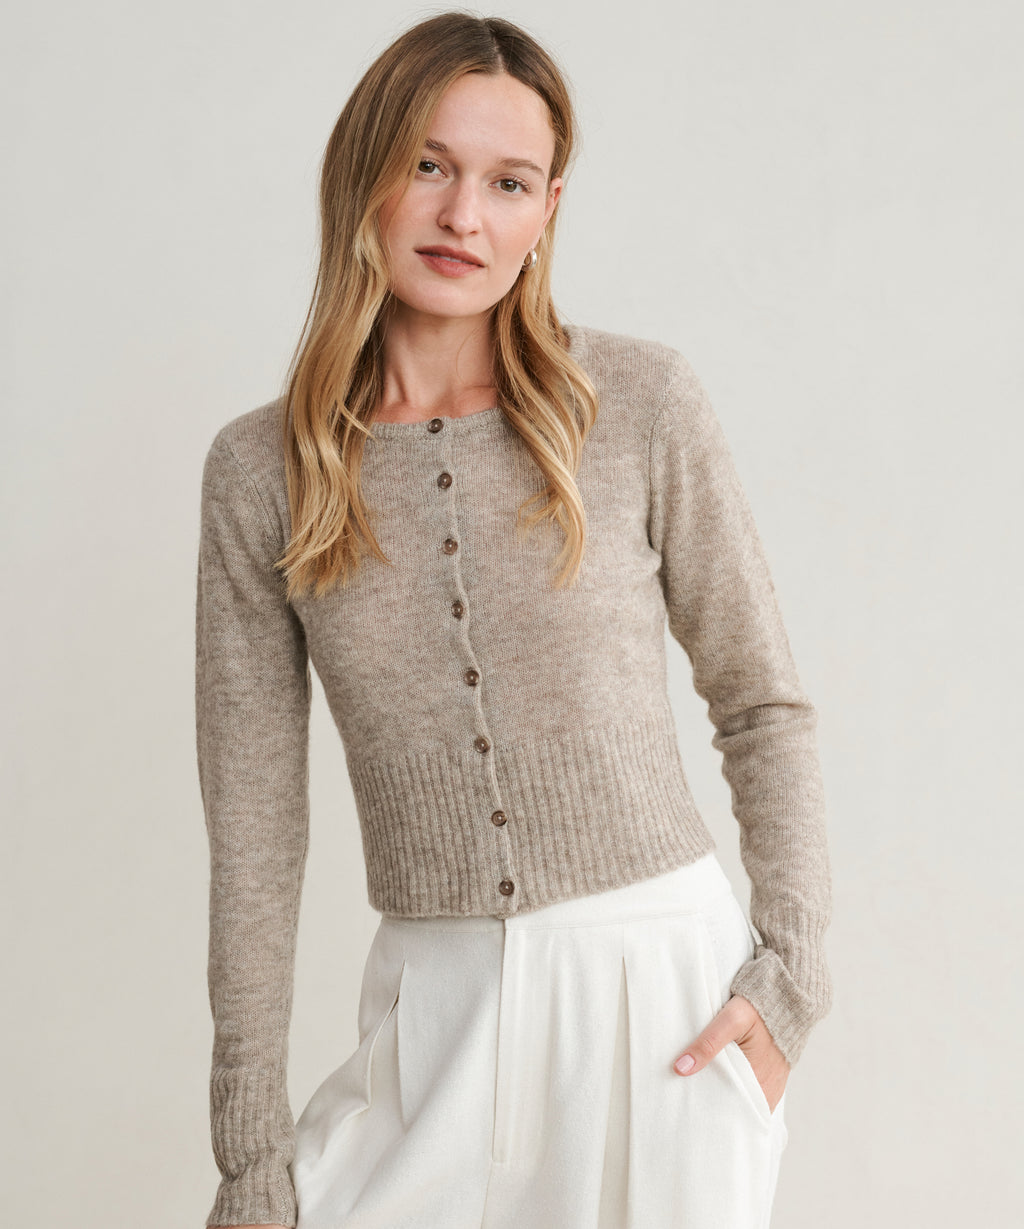 Jenni Kayne Women's Cable Cardigan Sweater